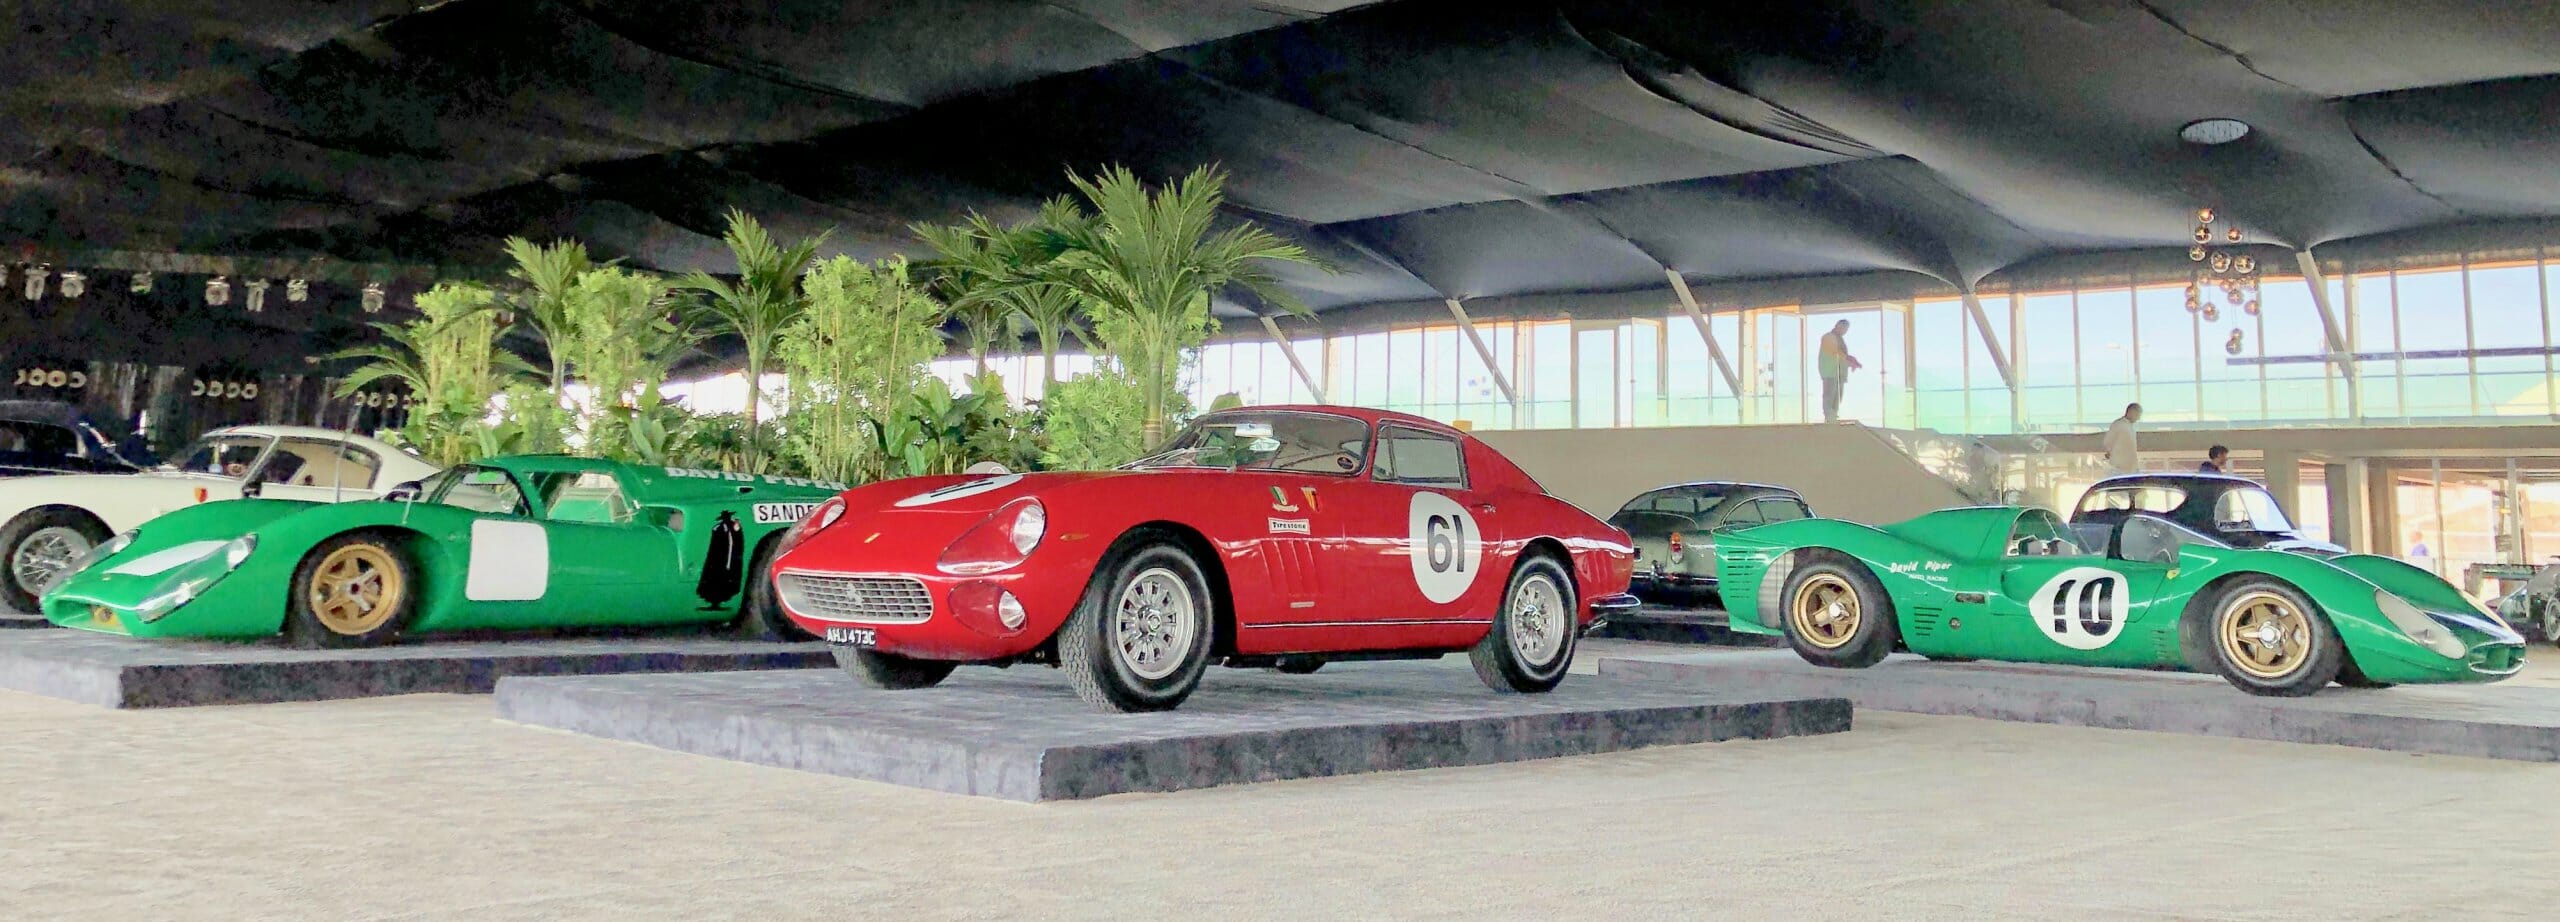 Salon Riyadh, Car culture shows global nature at Global Auto Salon Riyadh, ClassicCars.com Journal